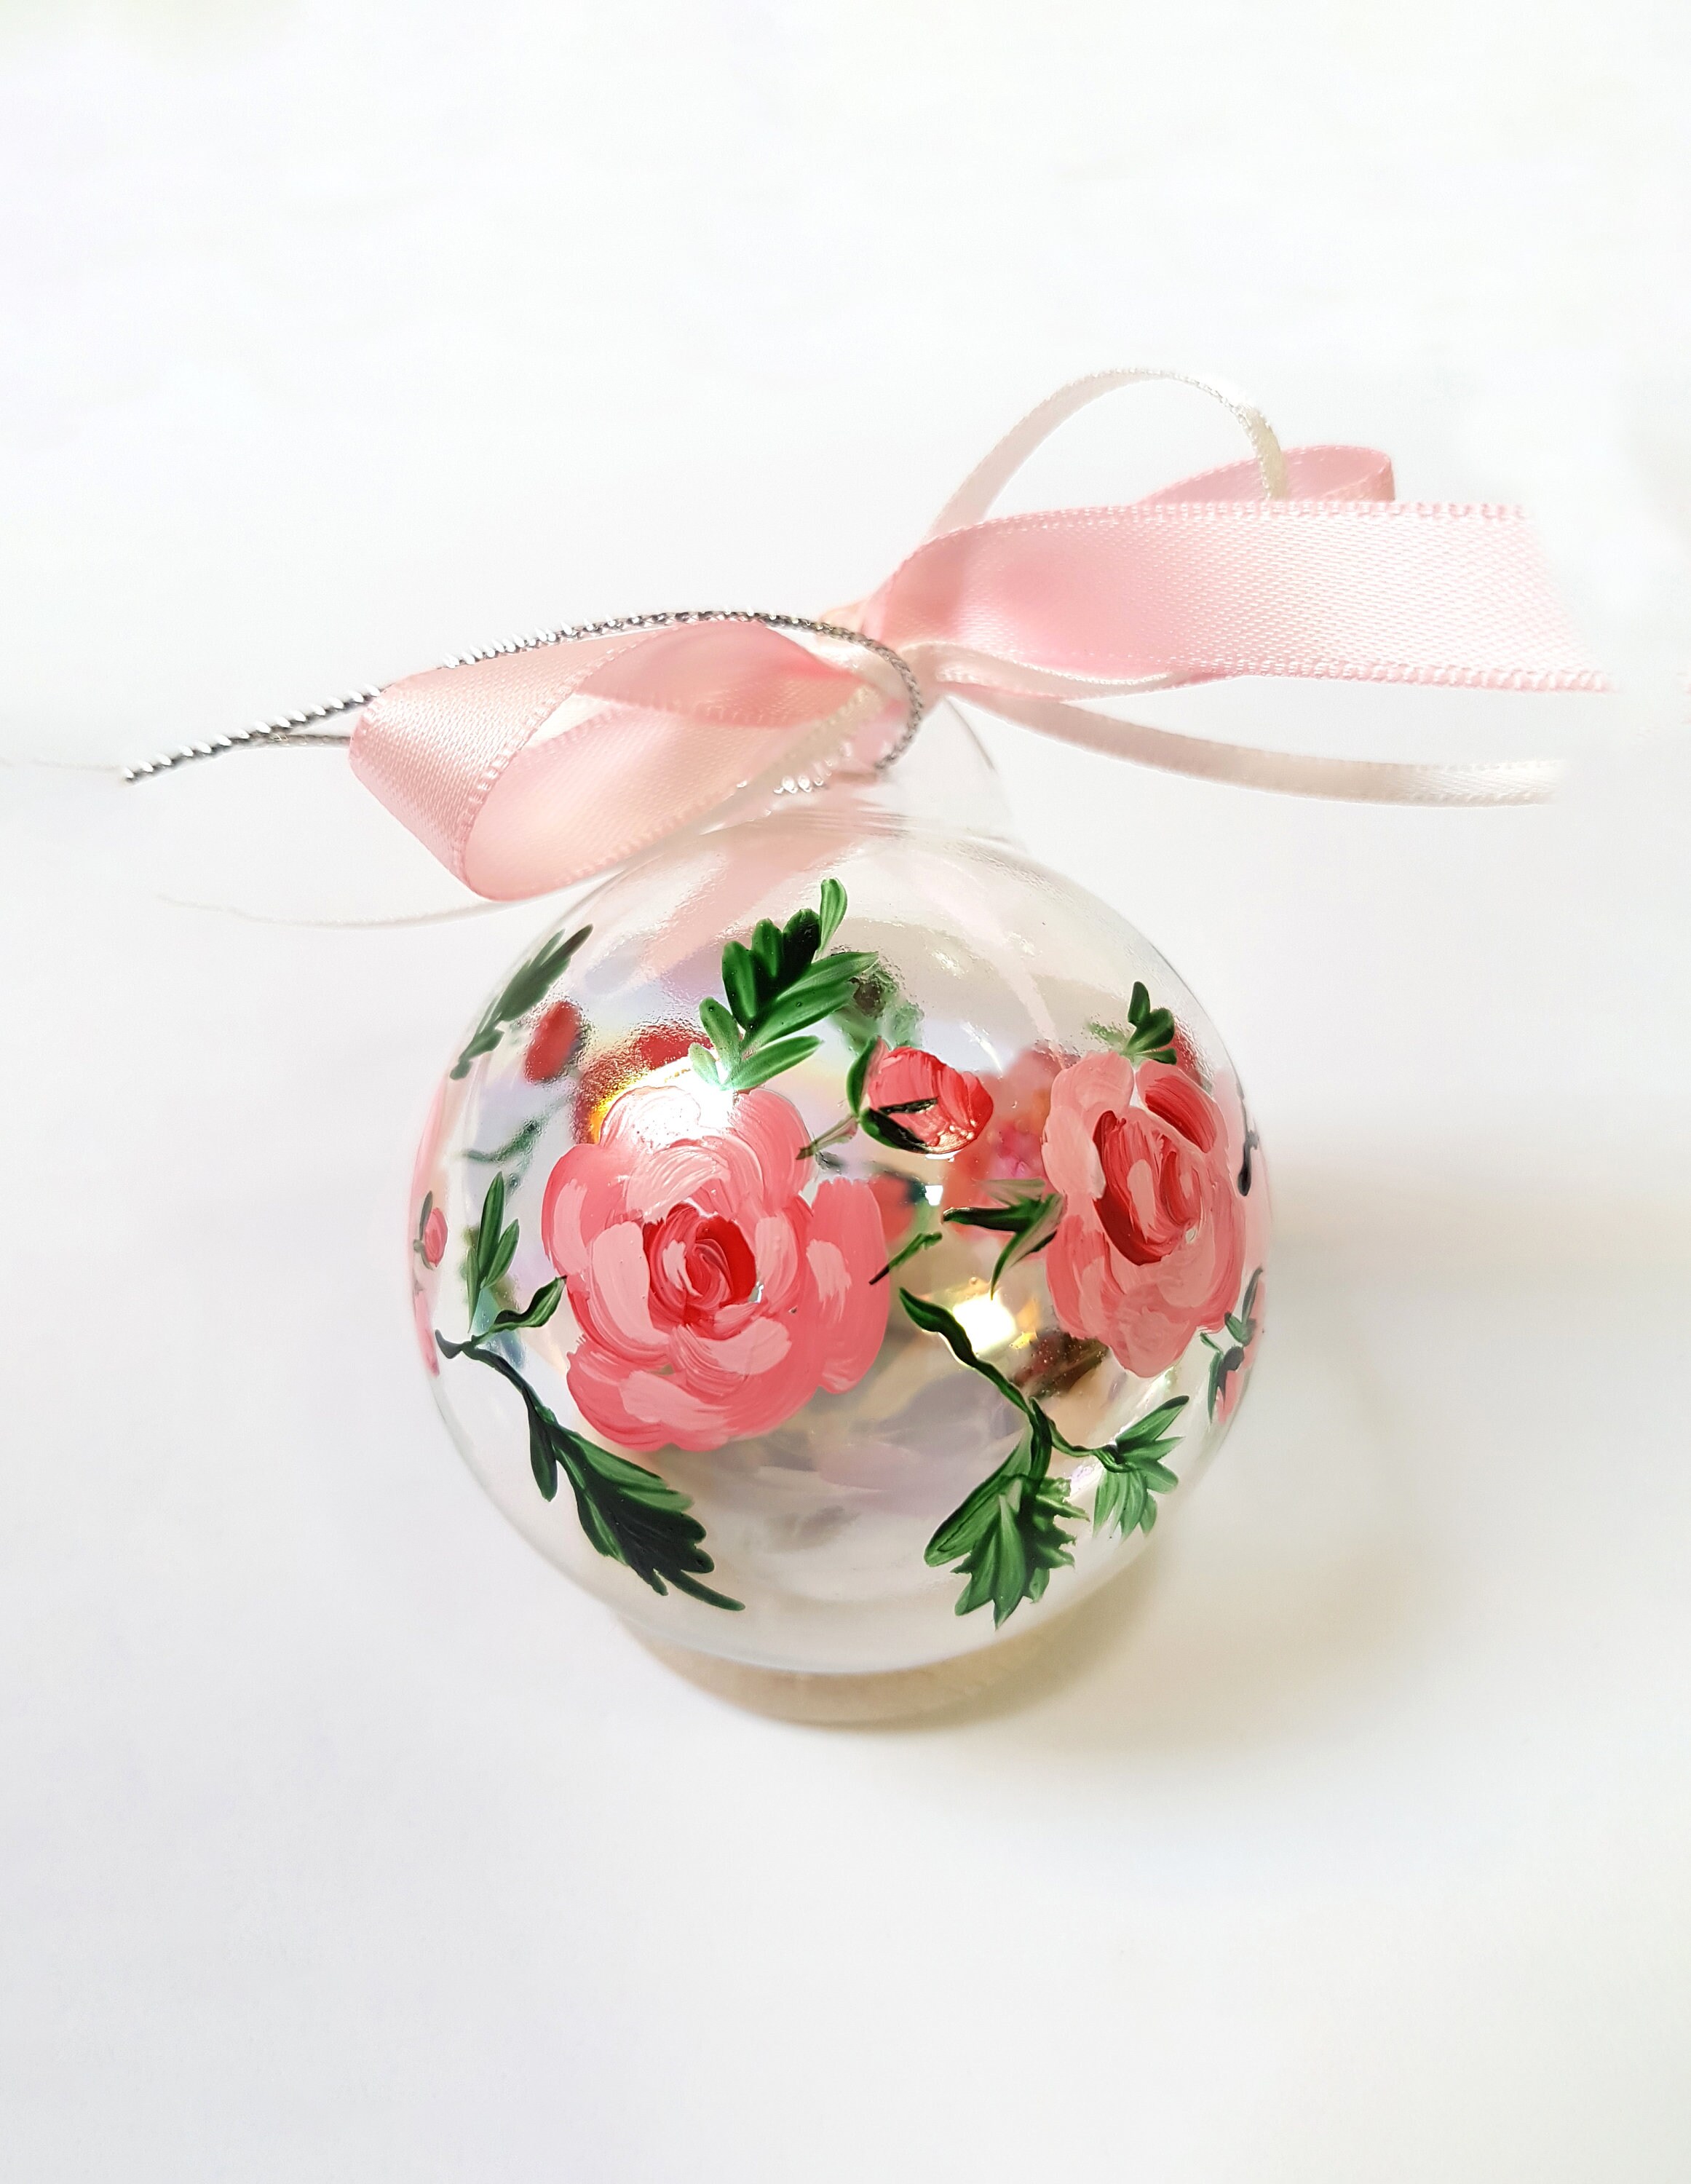 Wholesale Wedding Favors, Party Favors, by Event Blossom Monogram Bracelet  - Flower Girl